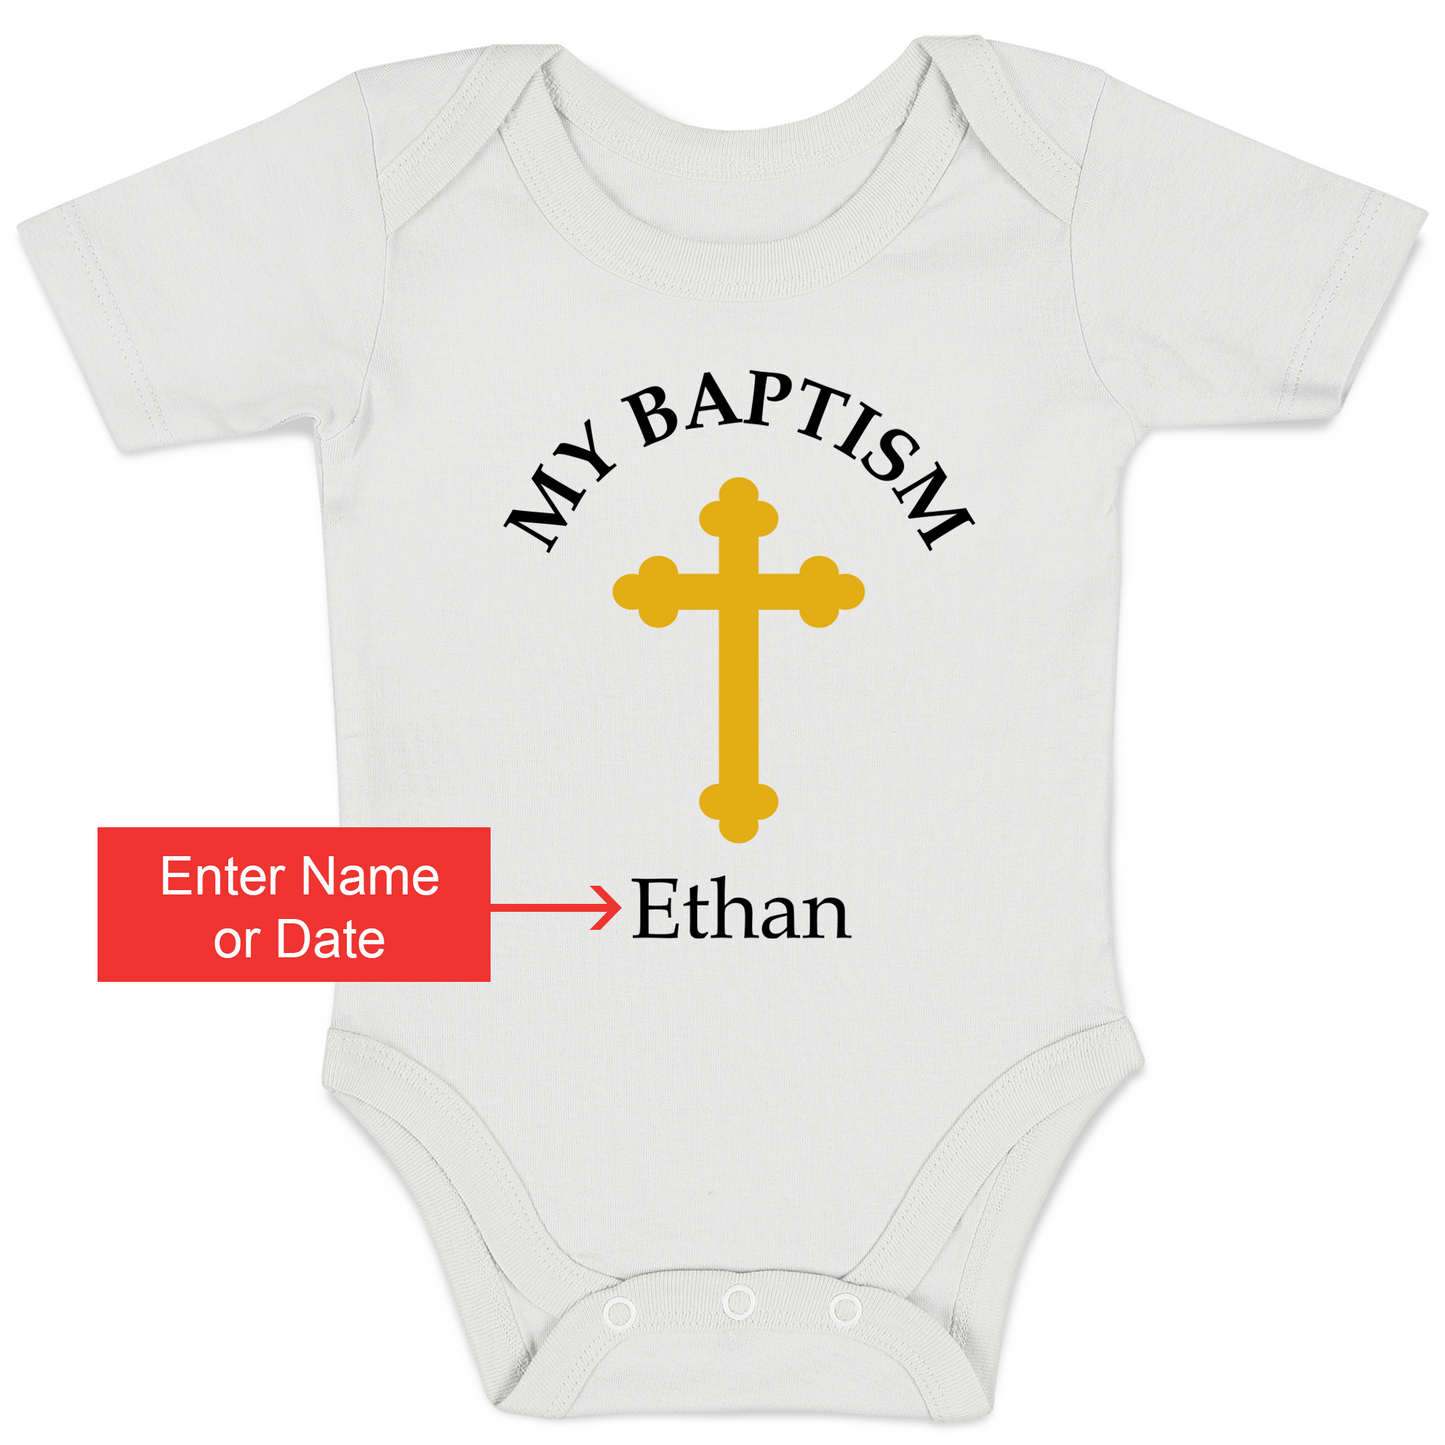 [Personalized] Endanzoo Organic Baby Bodysuit - My Baptism / Christening Day (White)